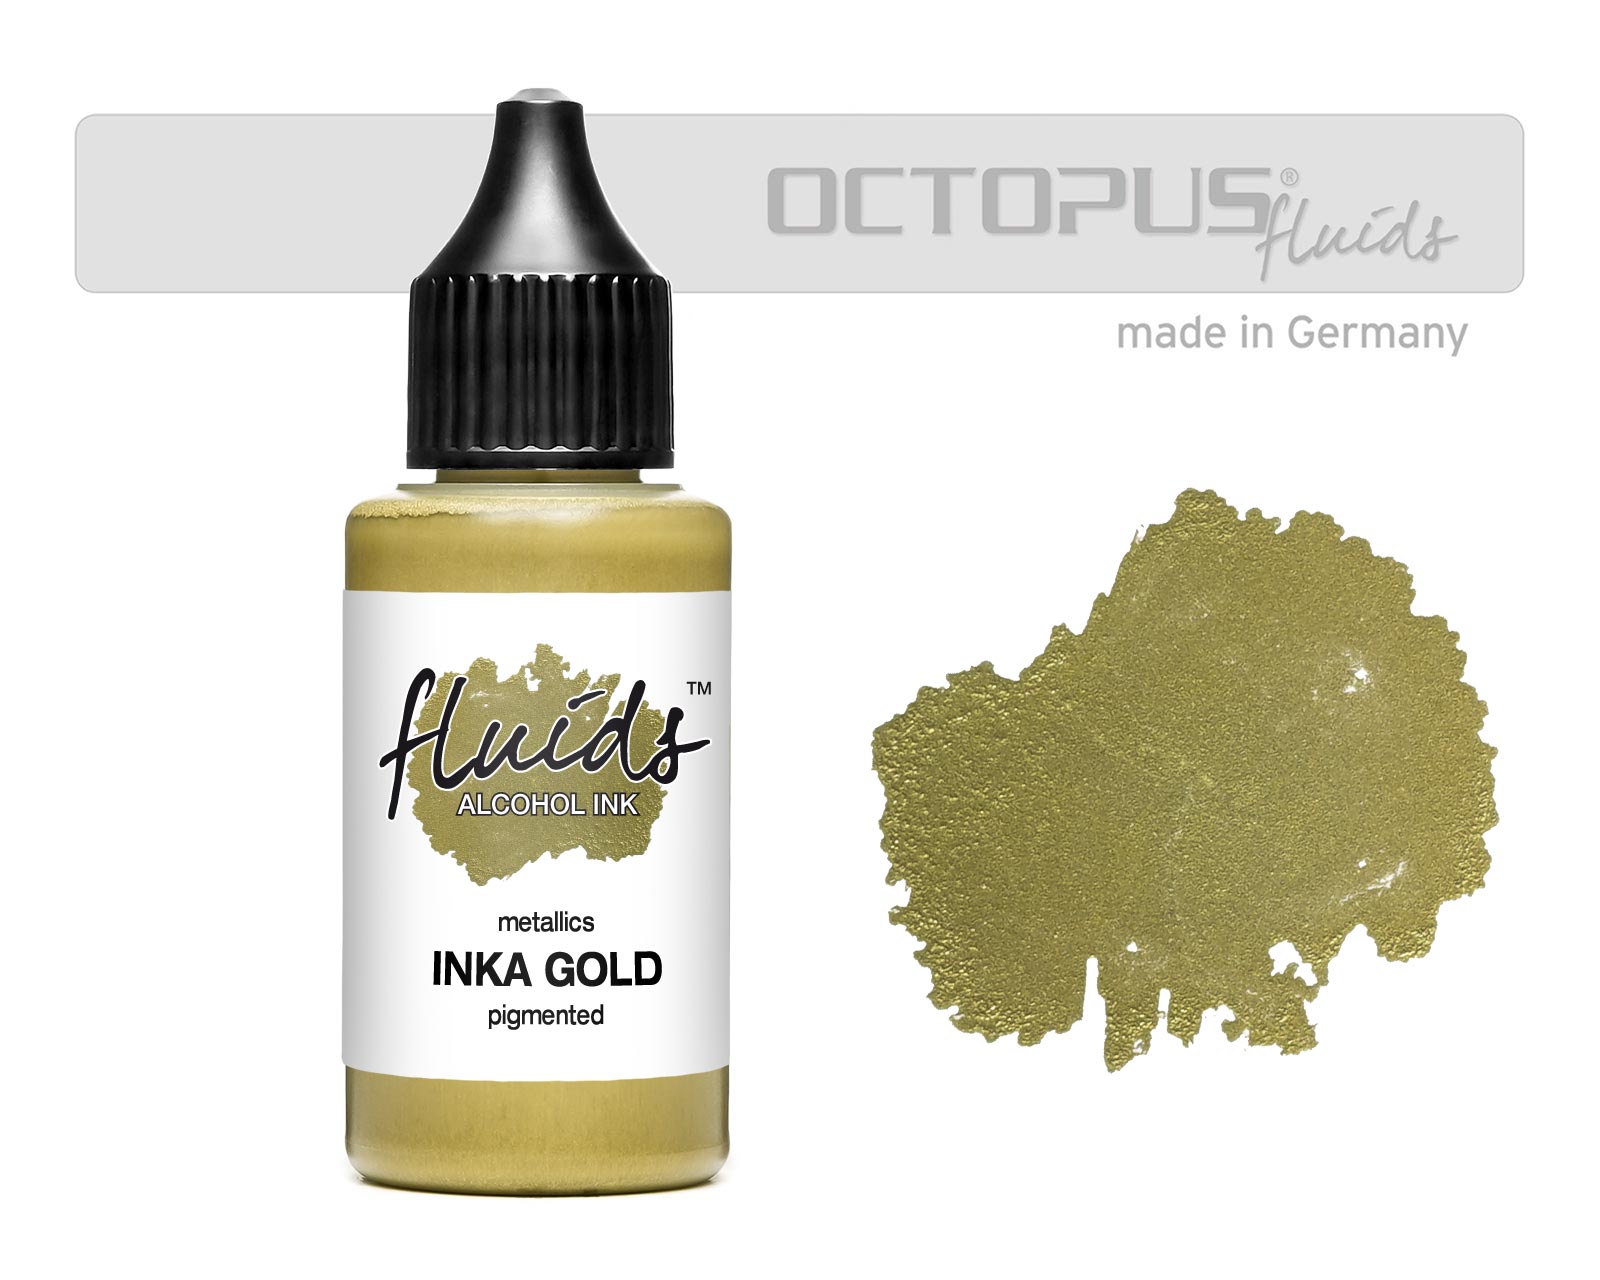 Fluids Alcohol Ink Inka Gold, Inchiostro ad alcohol per Fluid Art, argilla polimerica e Resin Art, oro metallico